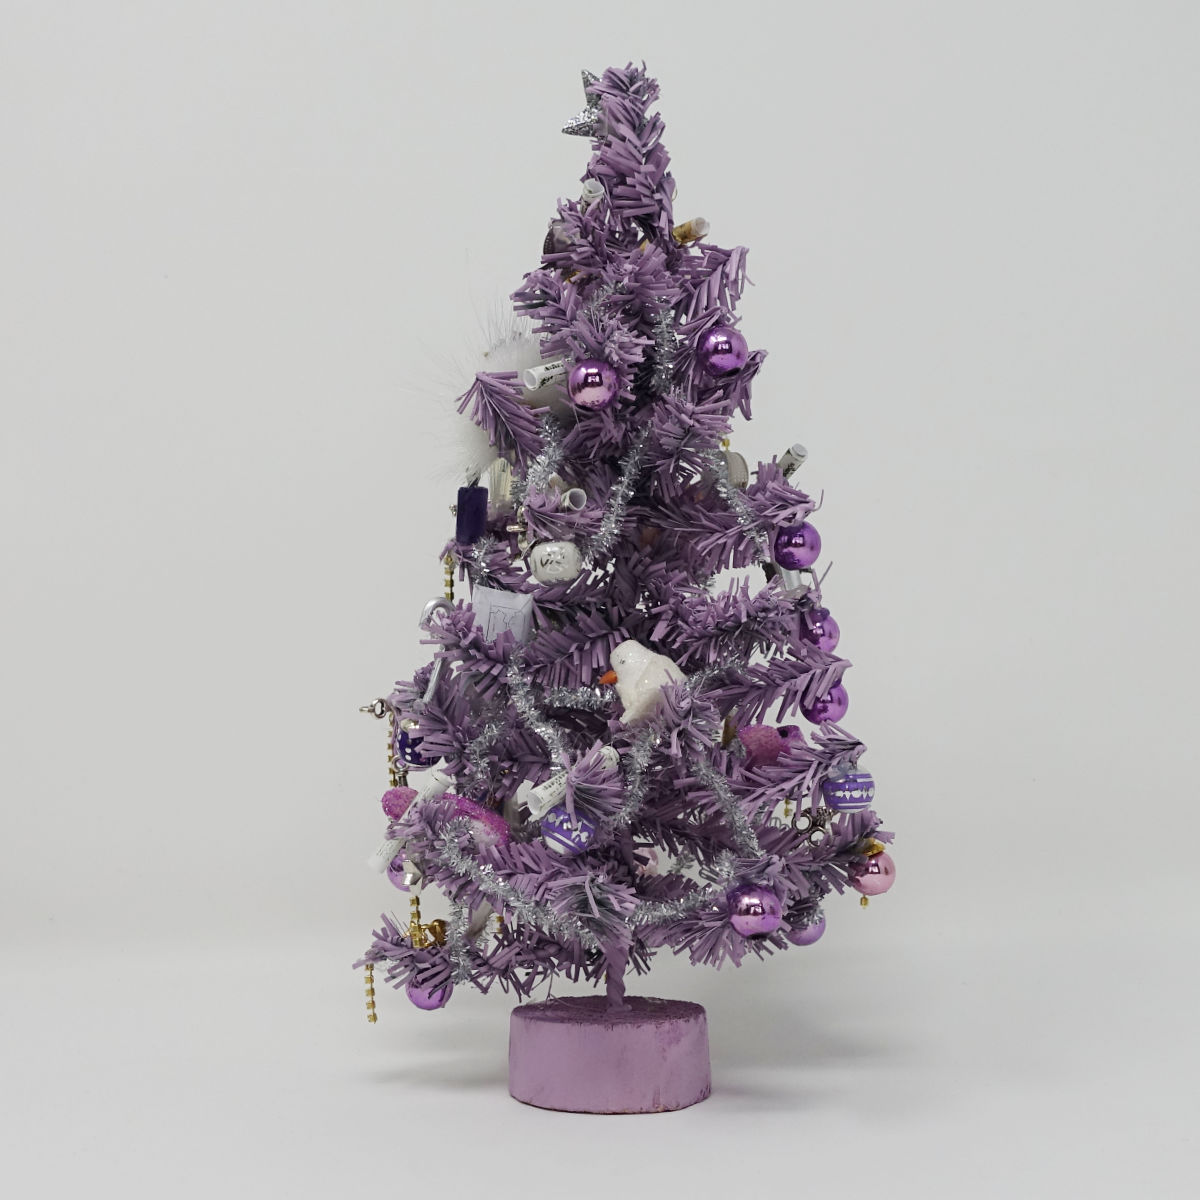 Dark Pink themed decorated Christmas tree - Micro Miniatures